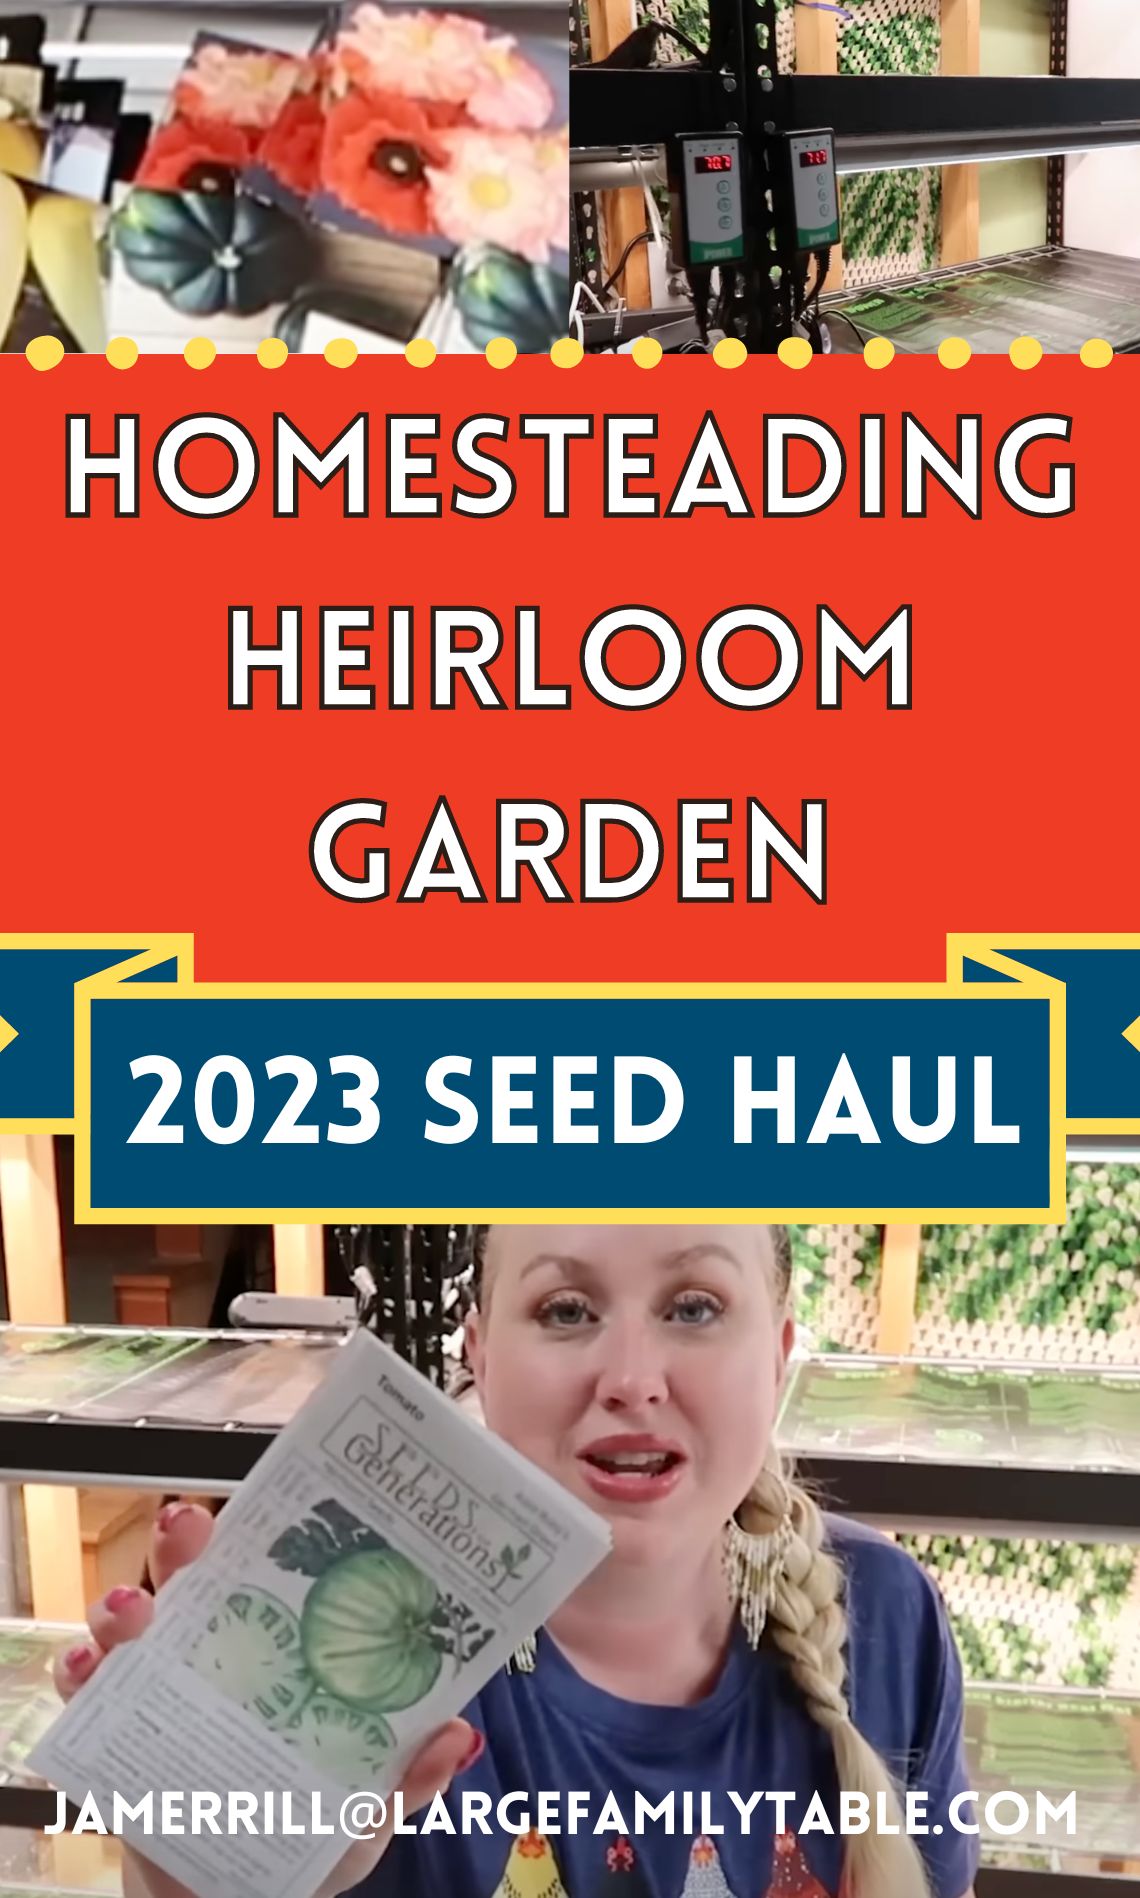 Homesteading Heirloom Garden Seed Haul